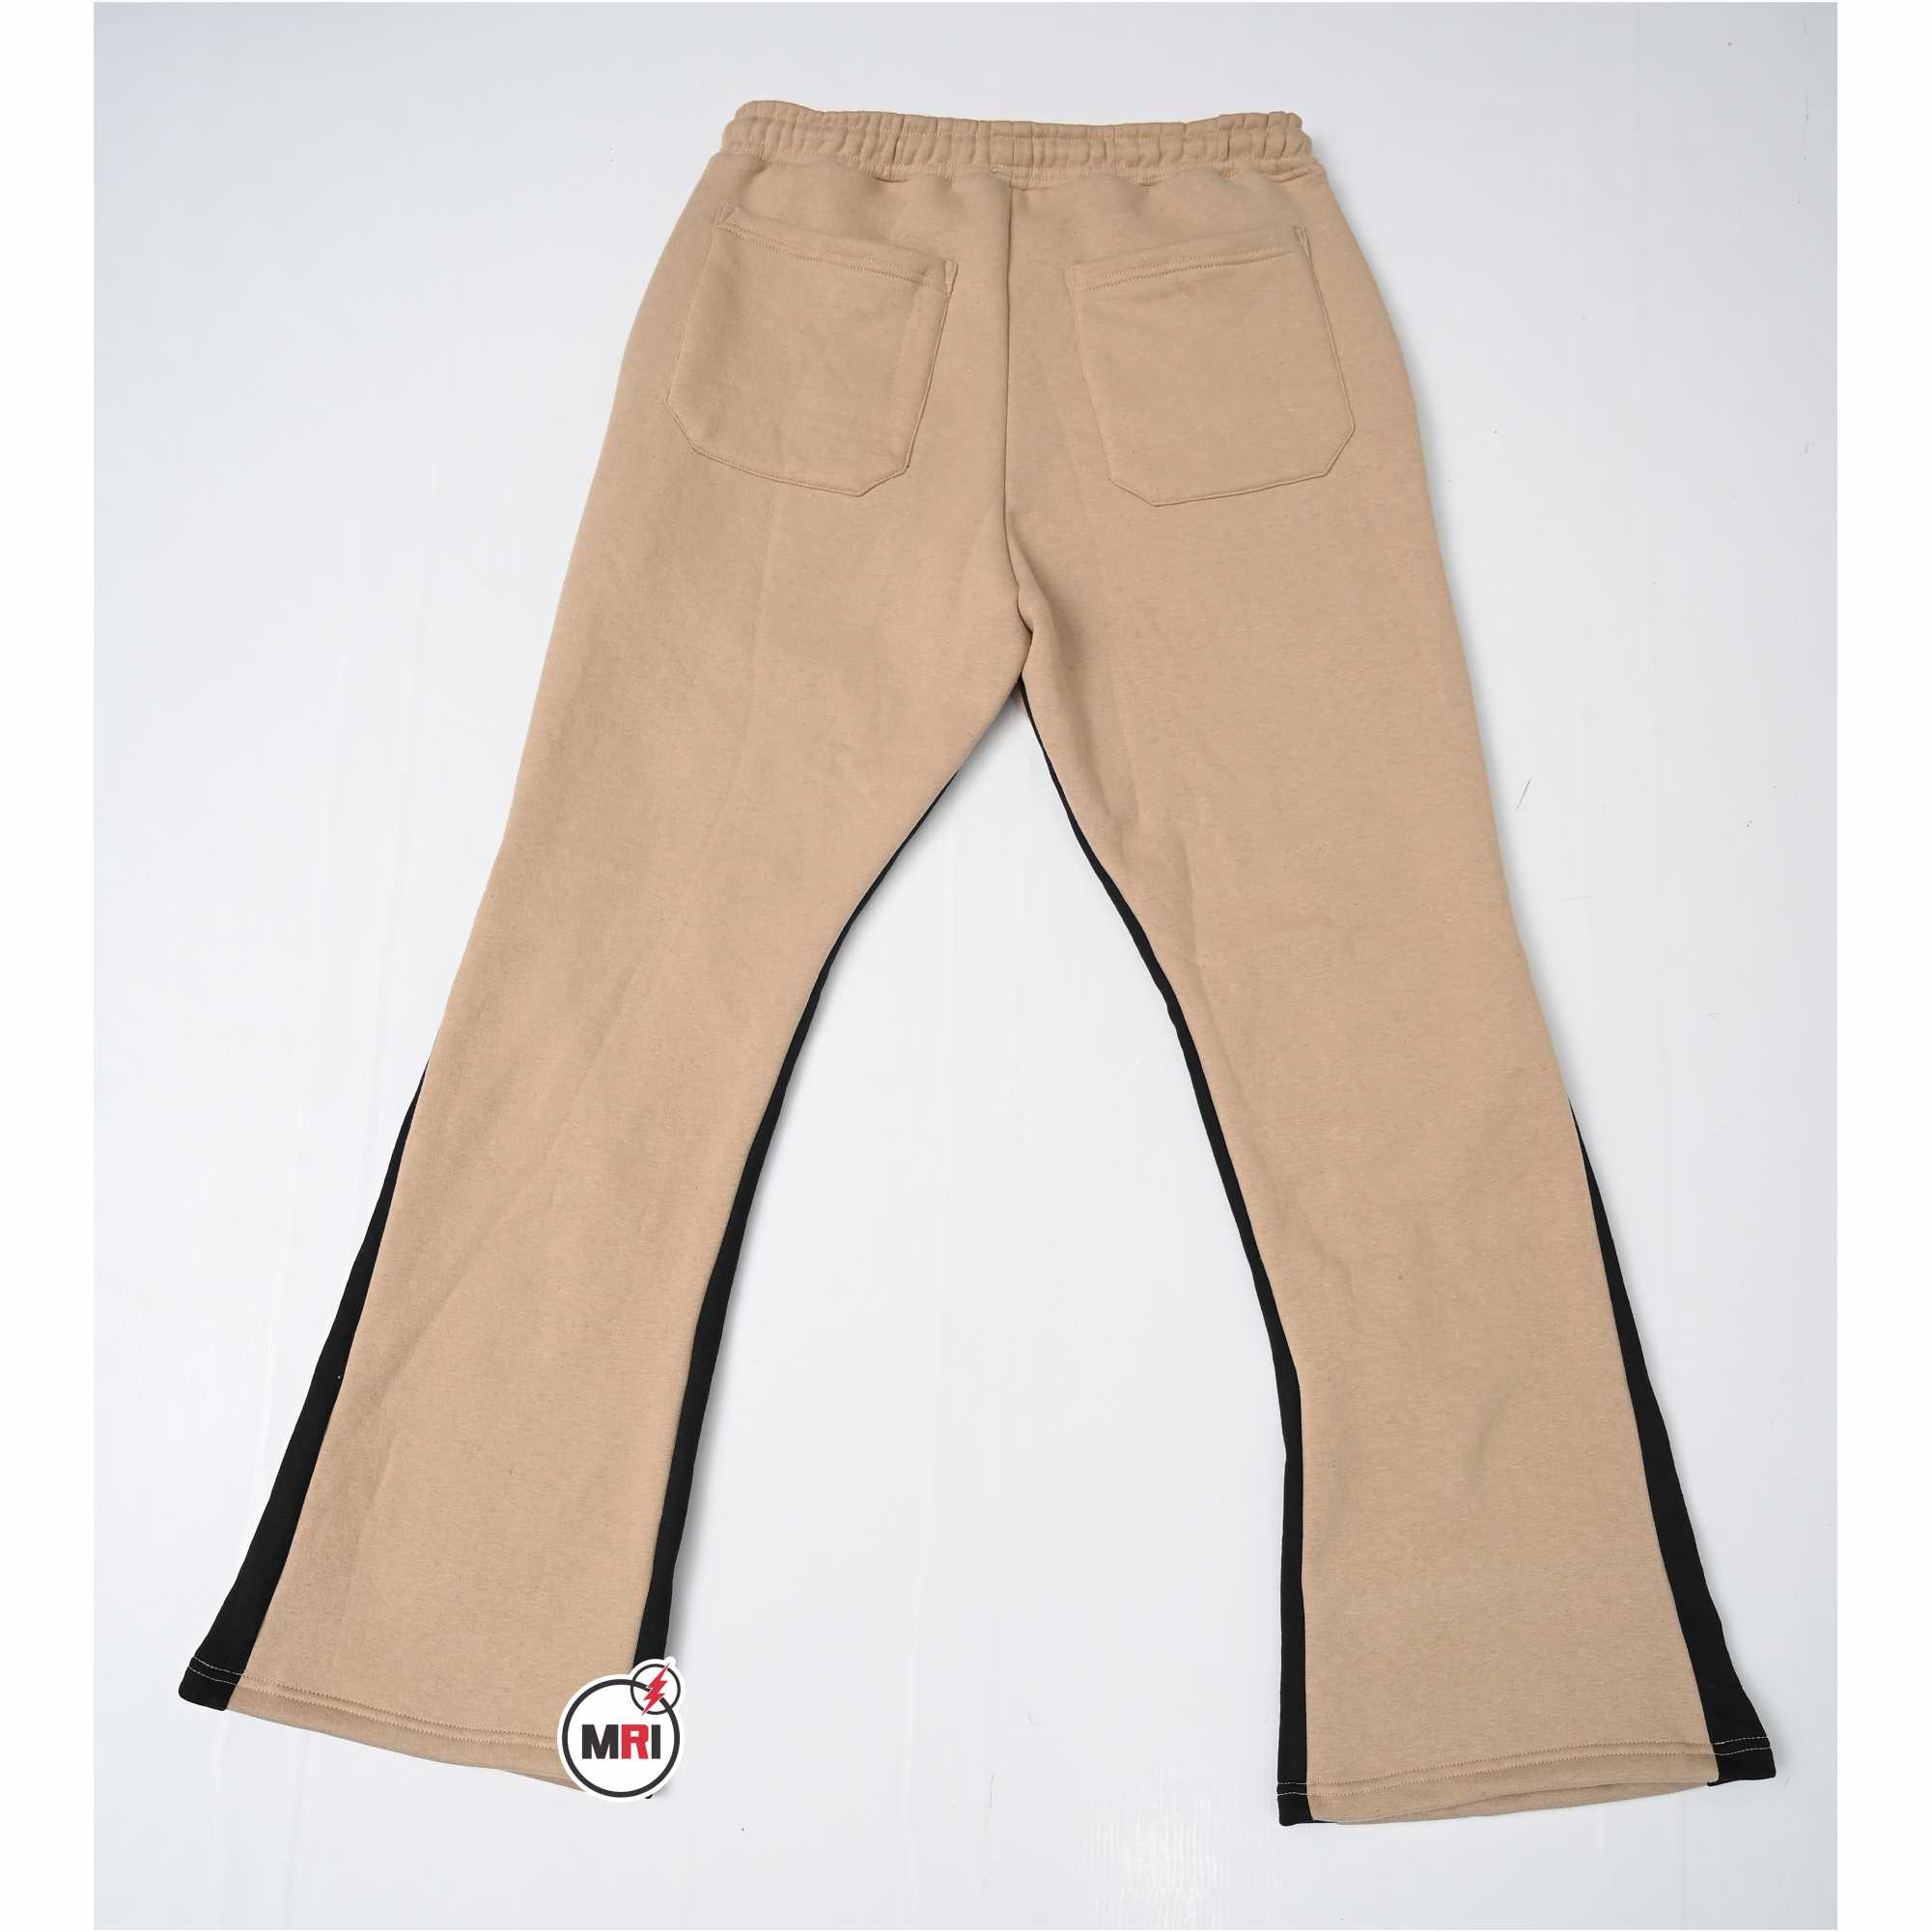 Unique Customized Printed Flare Pant